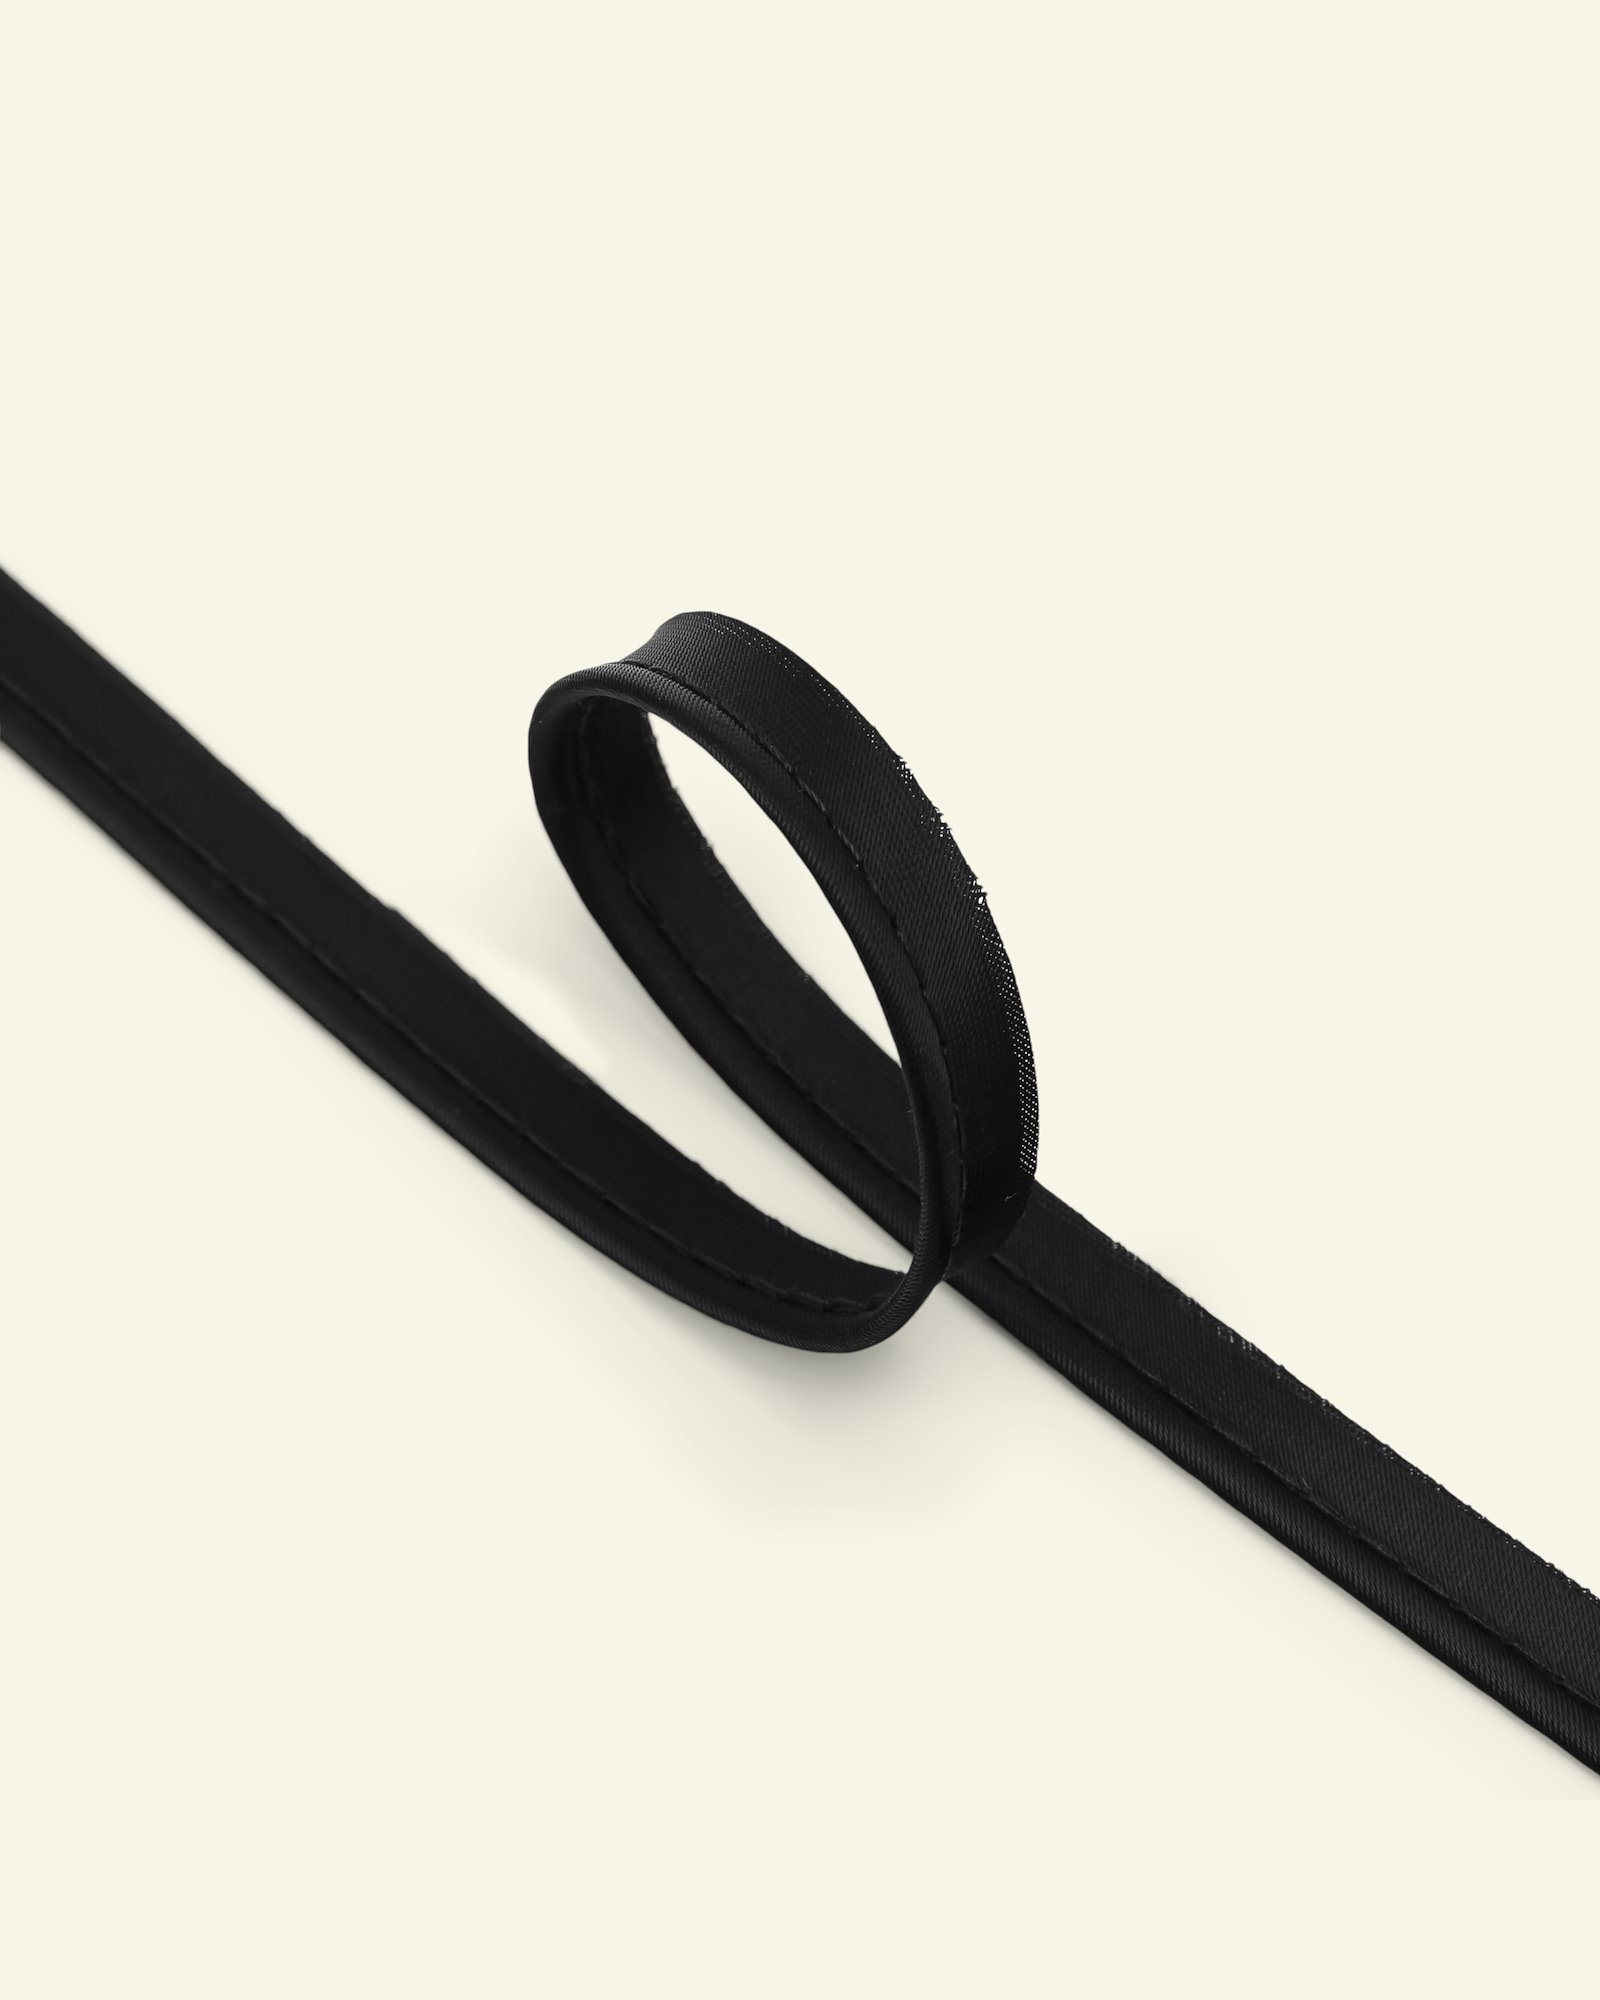 Piping ribbon satin 4mm black 5m 72043_pack